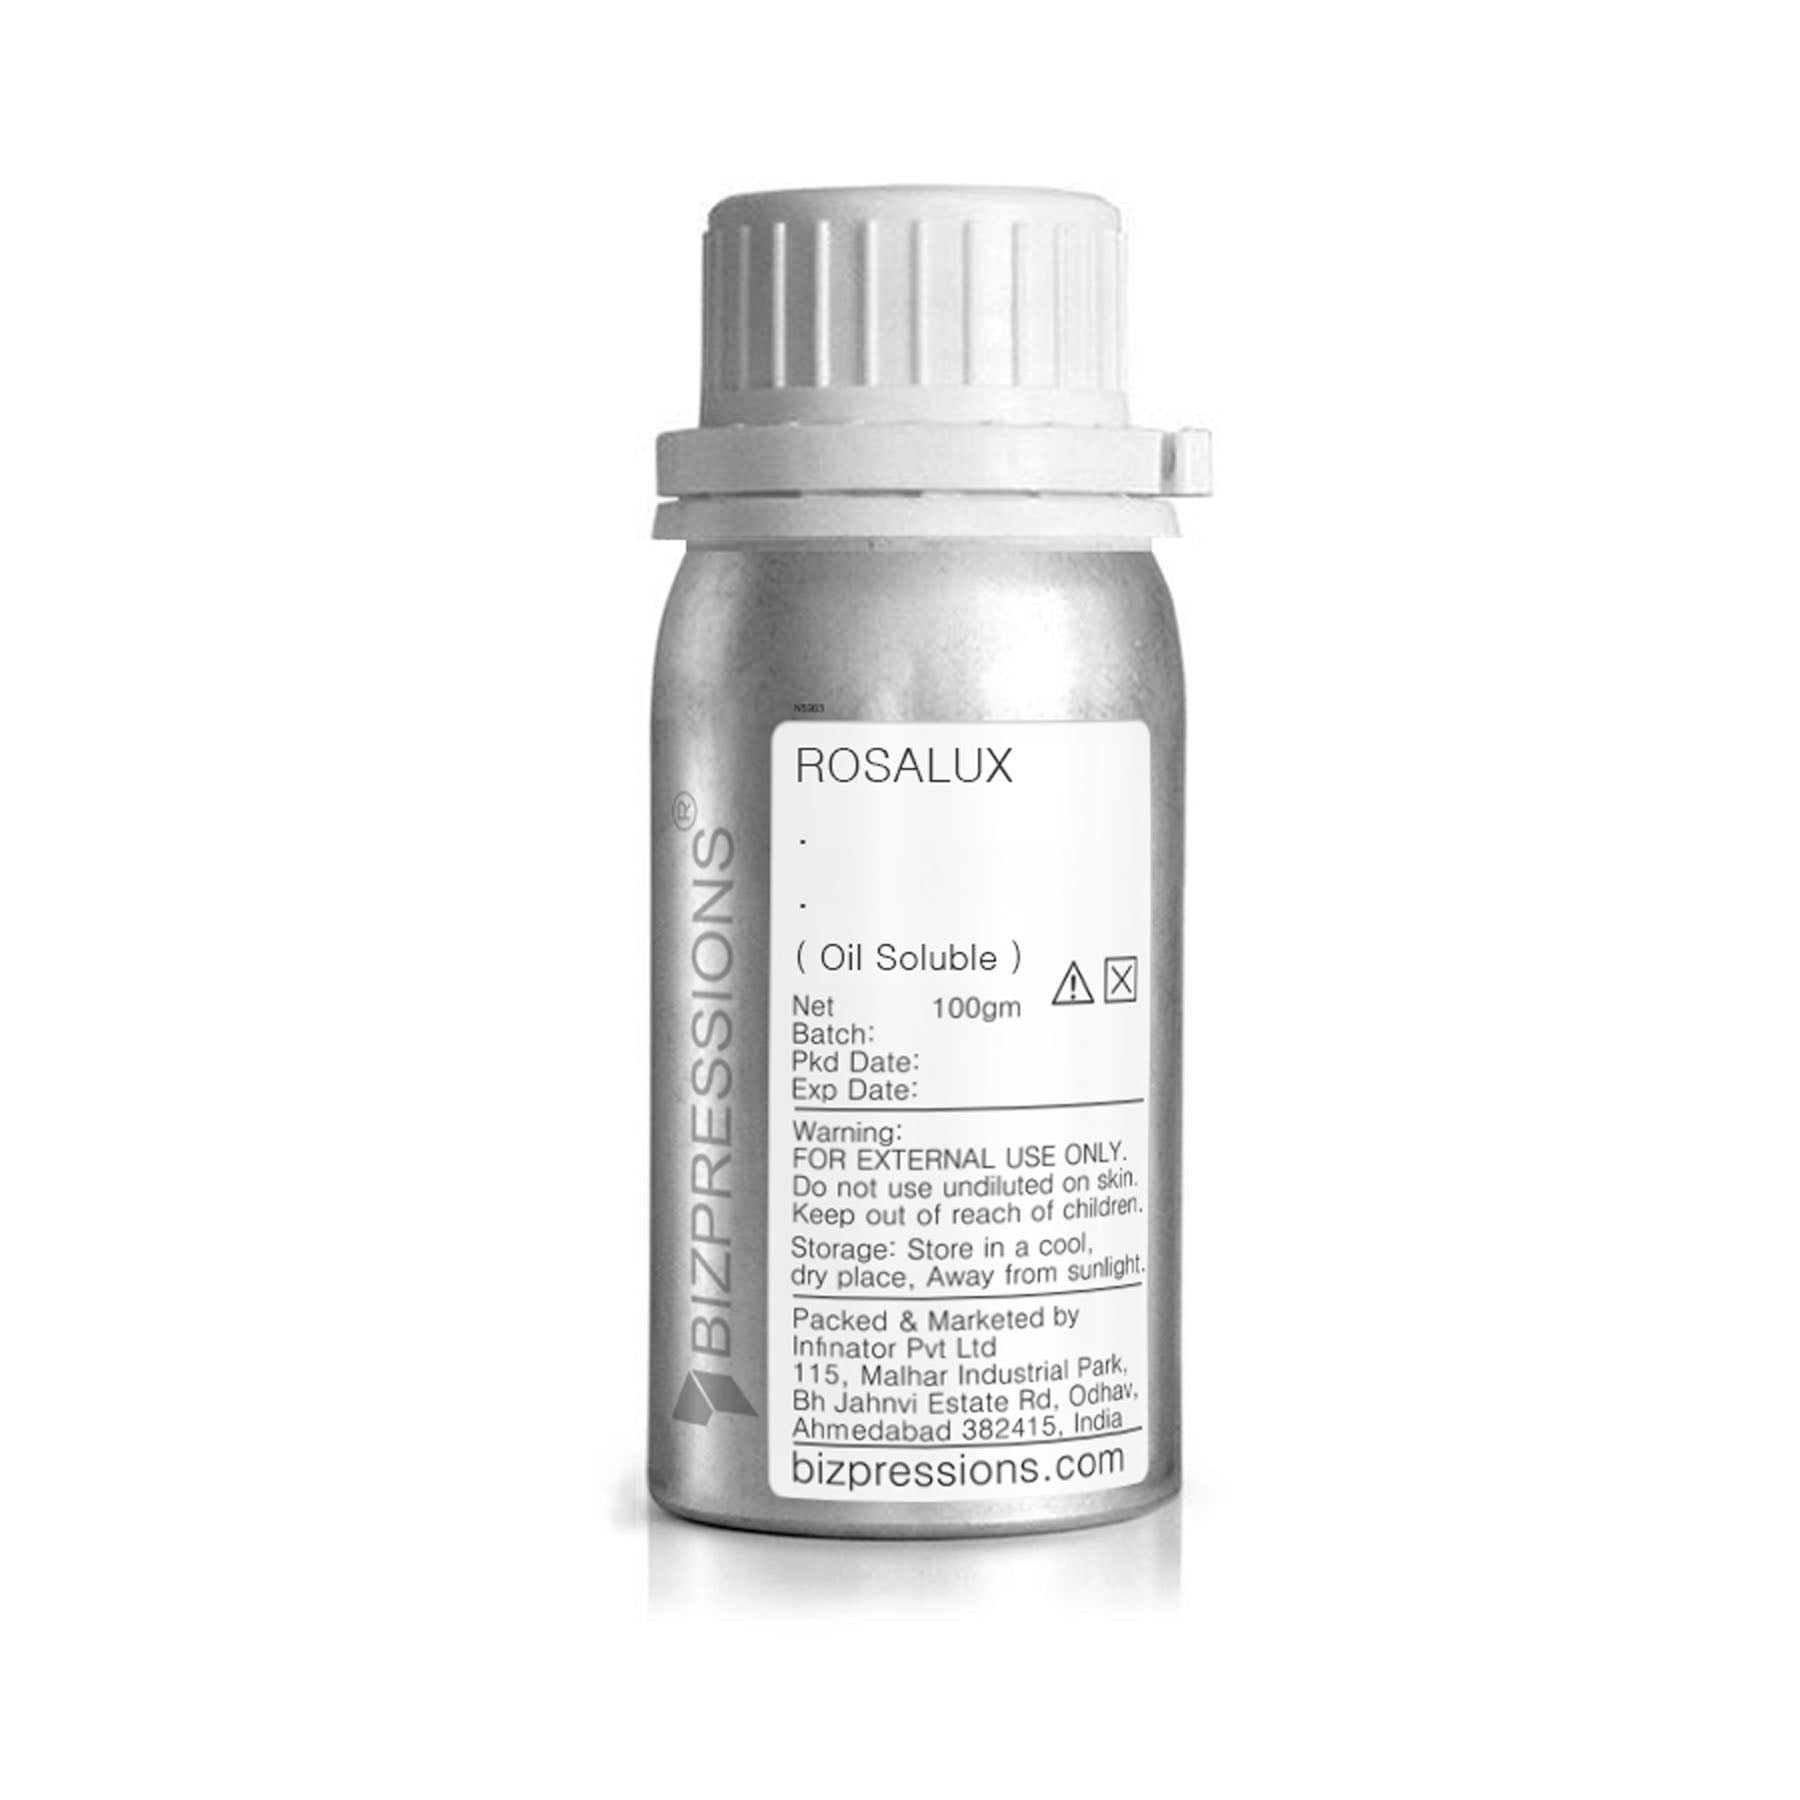 ROSALUX - Fragrance ( Oil Soluble ) - 100 gm